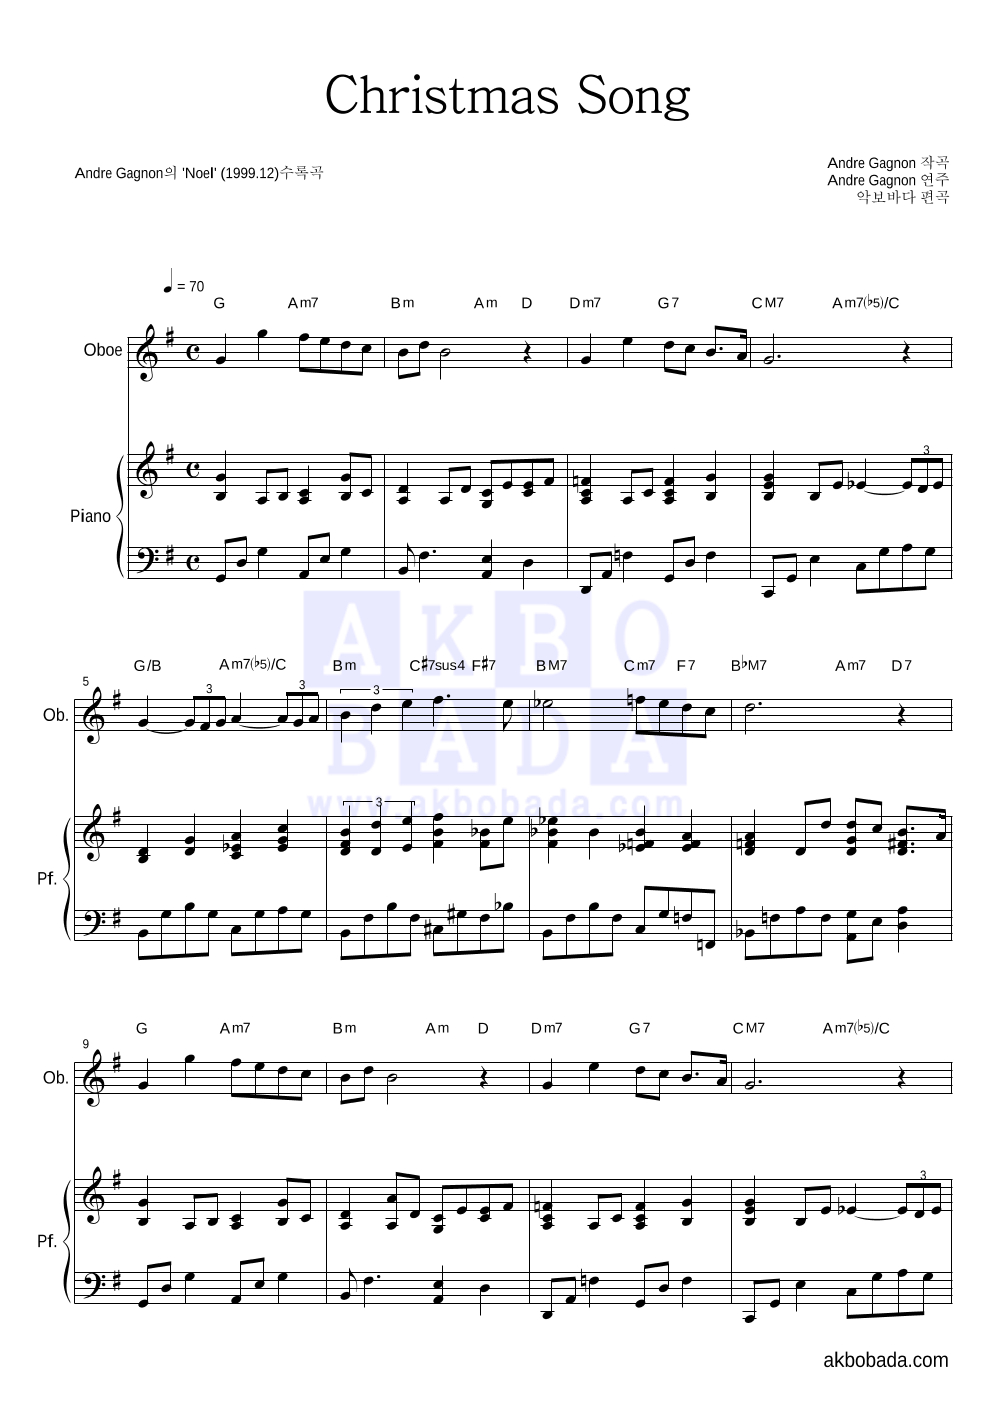 Andre Gagnon - Christmas Song 오보에&피아노 악보 